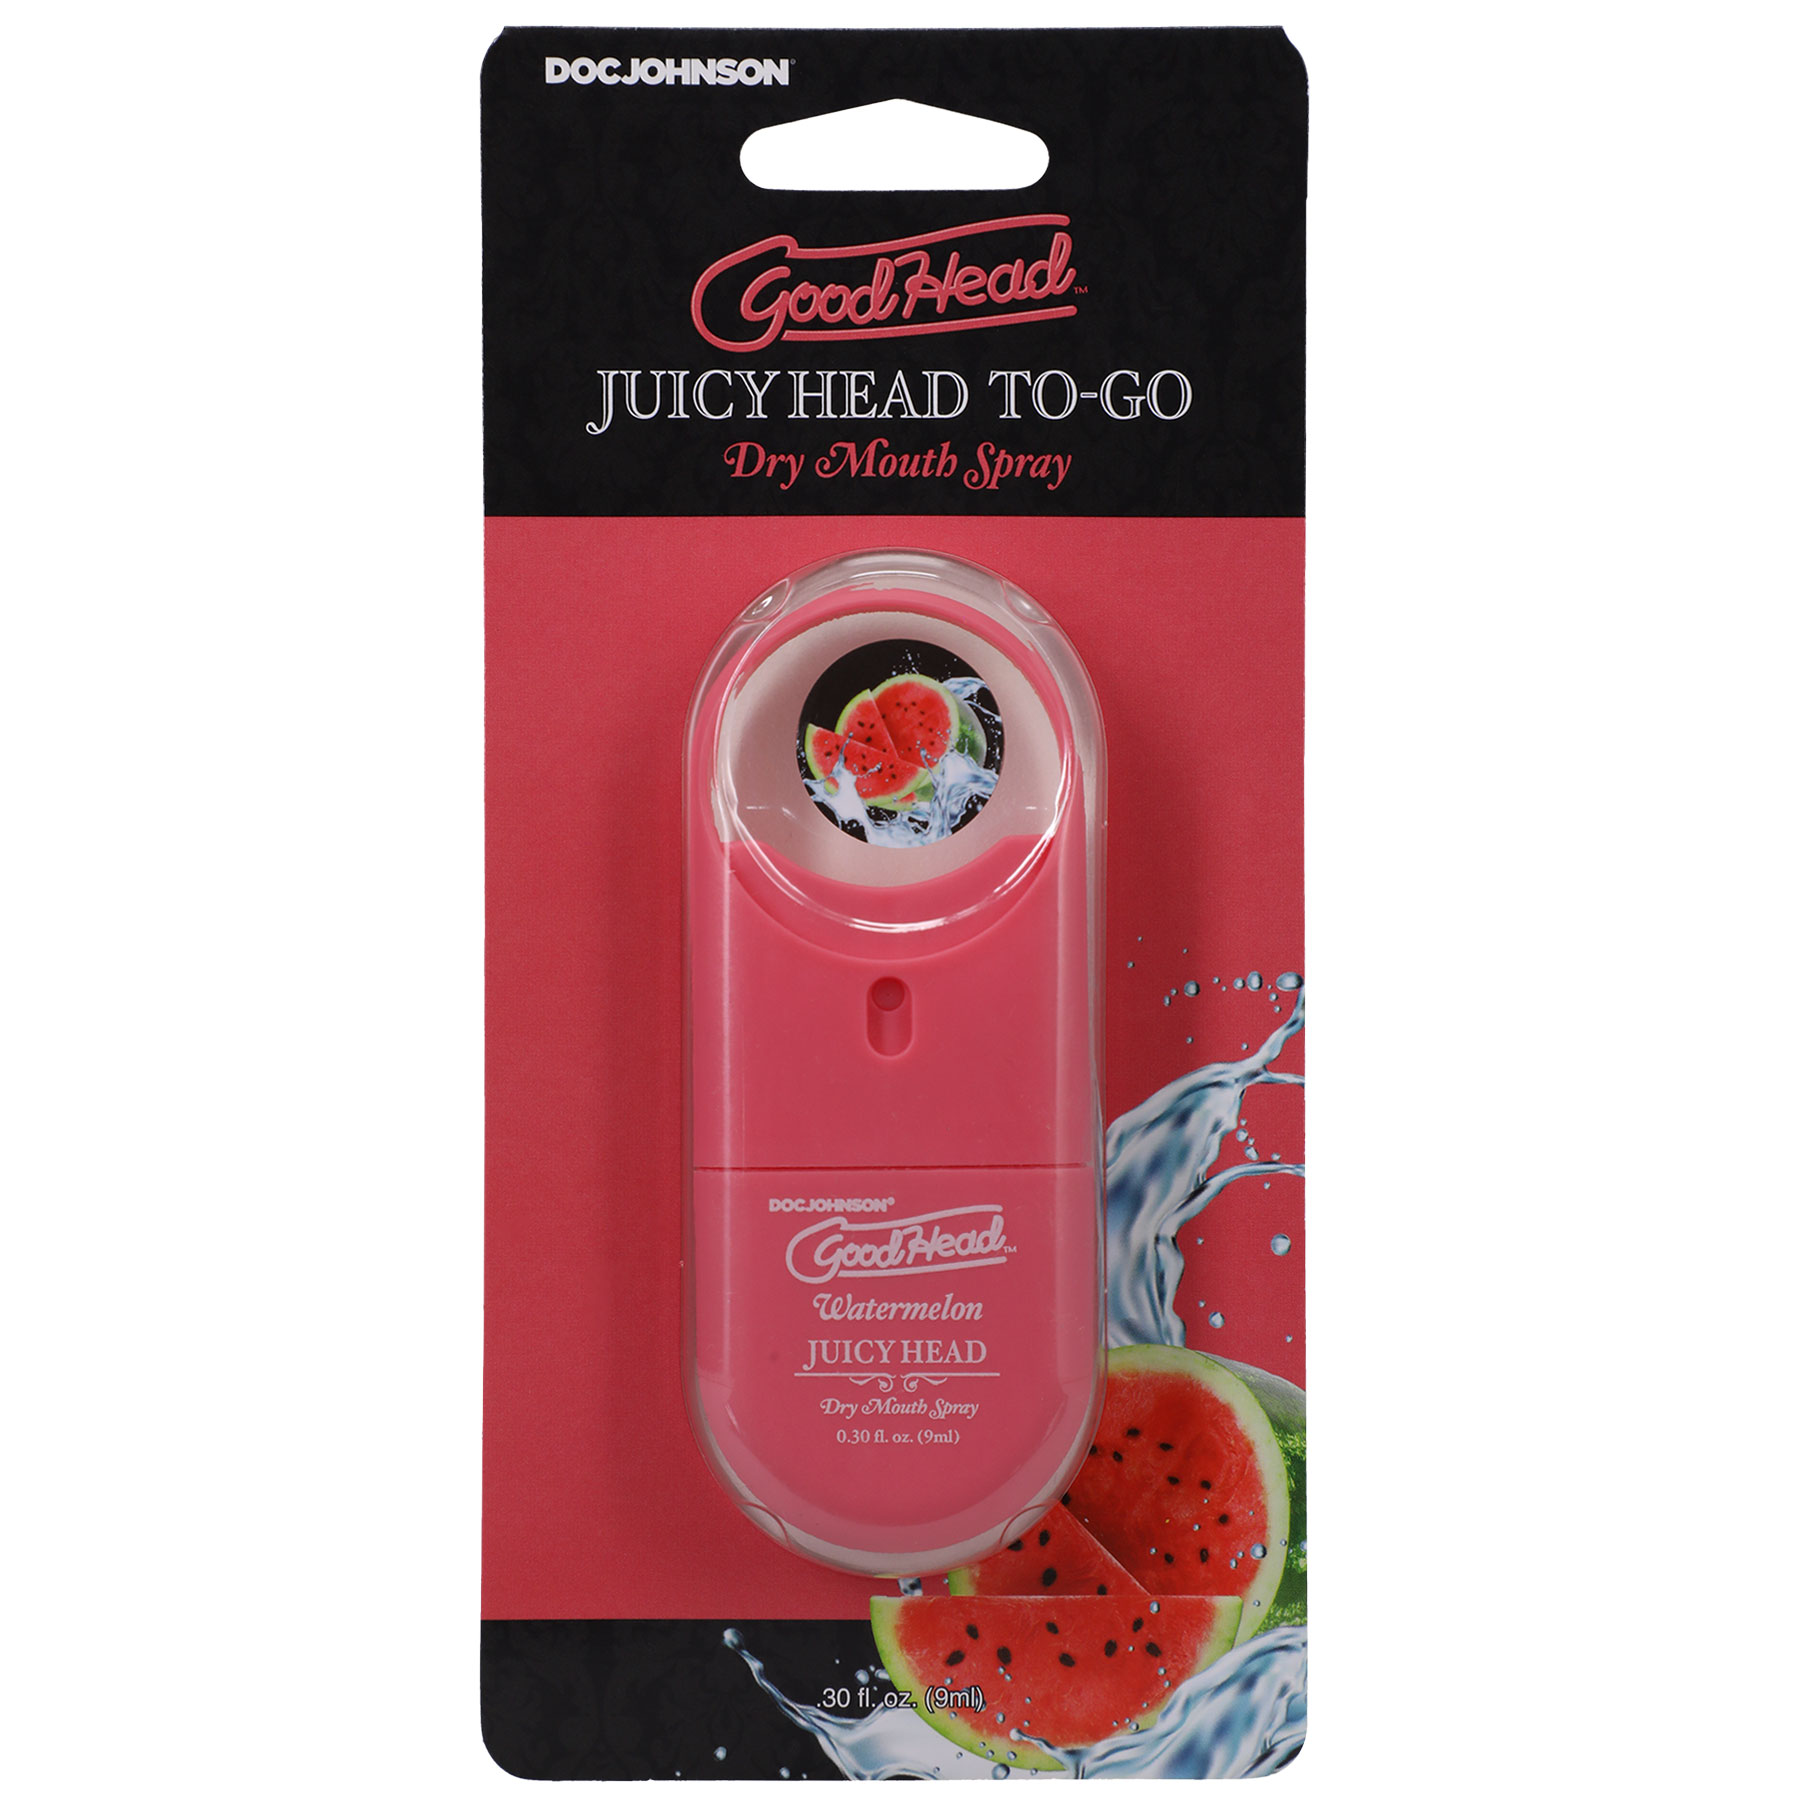 goodhead juicy head dry mouth spray to go . fl watermelon 